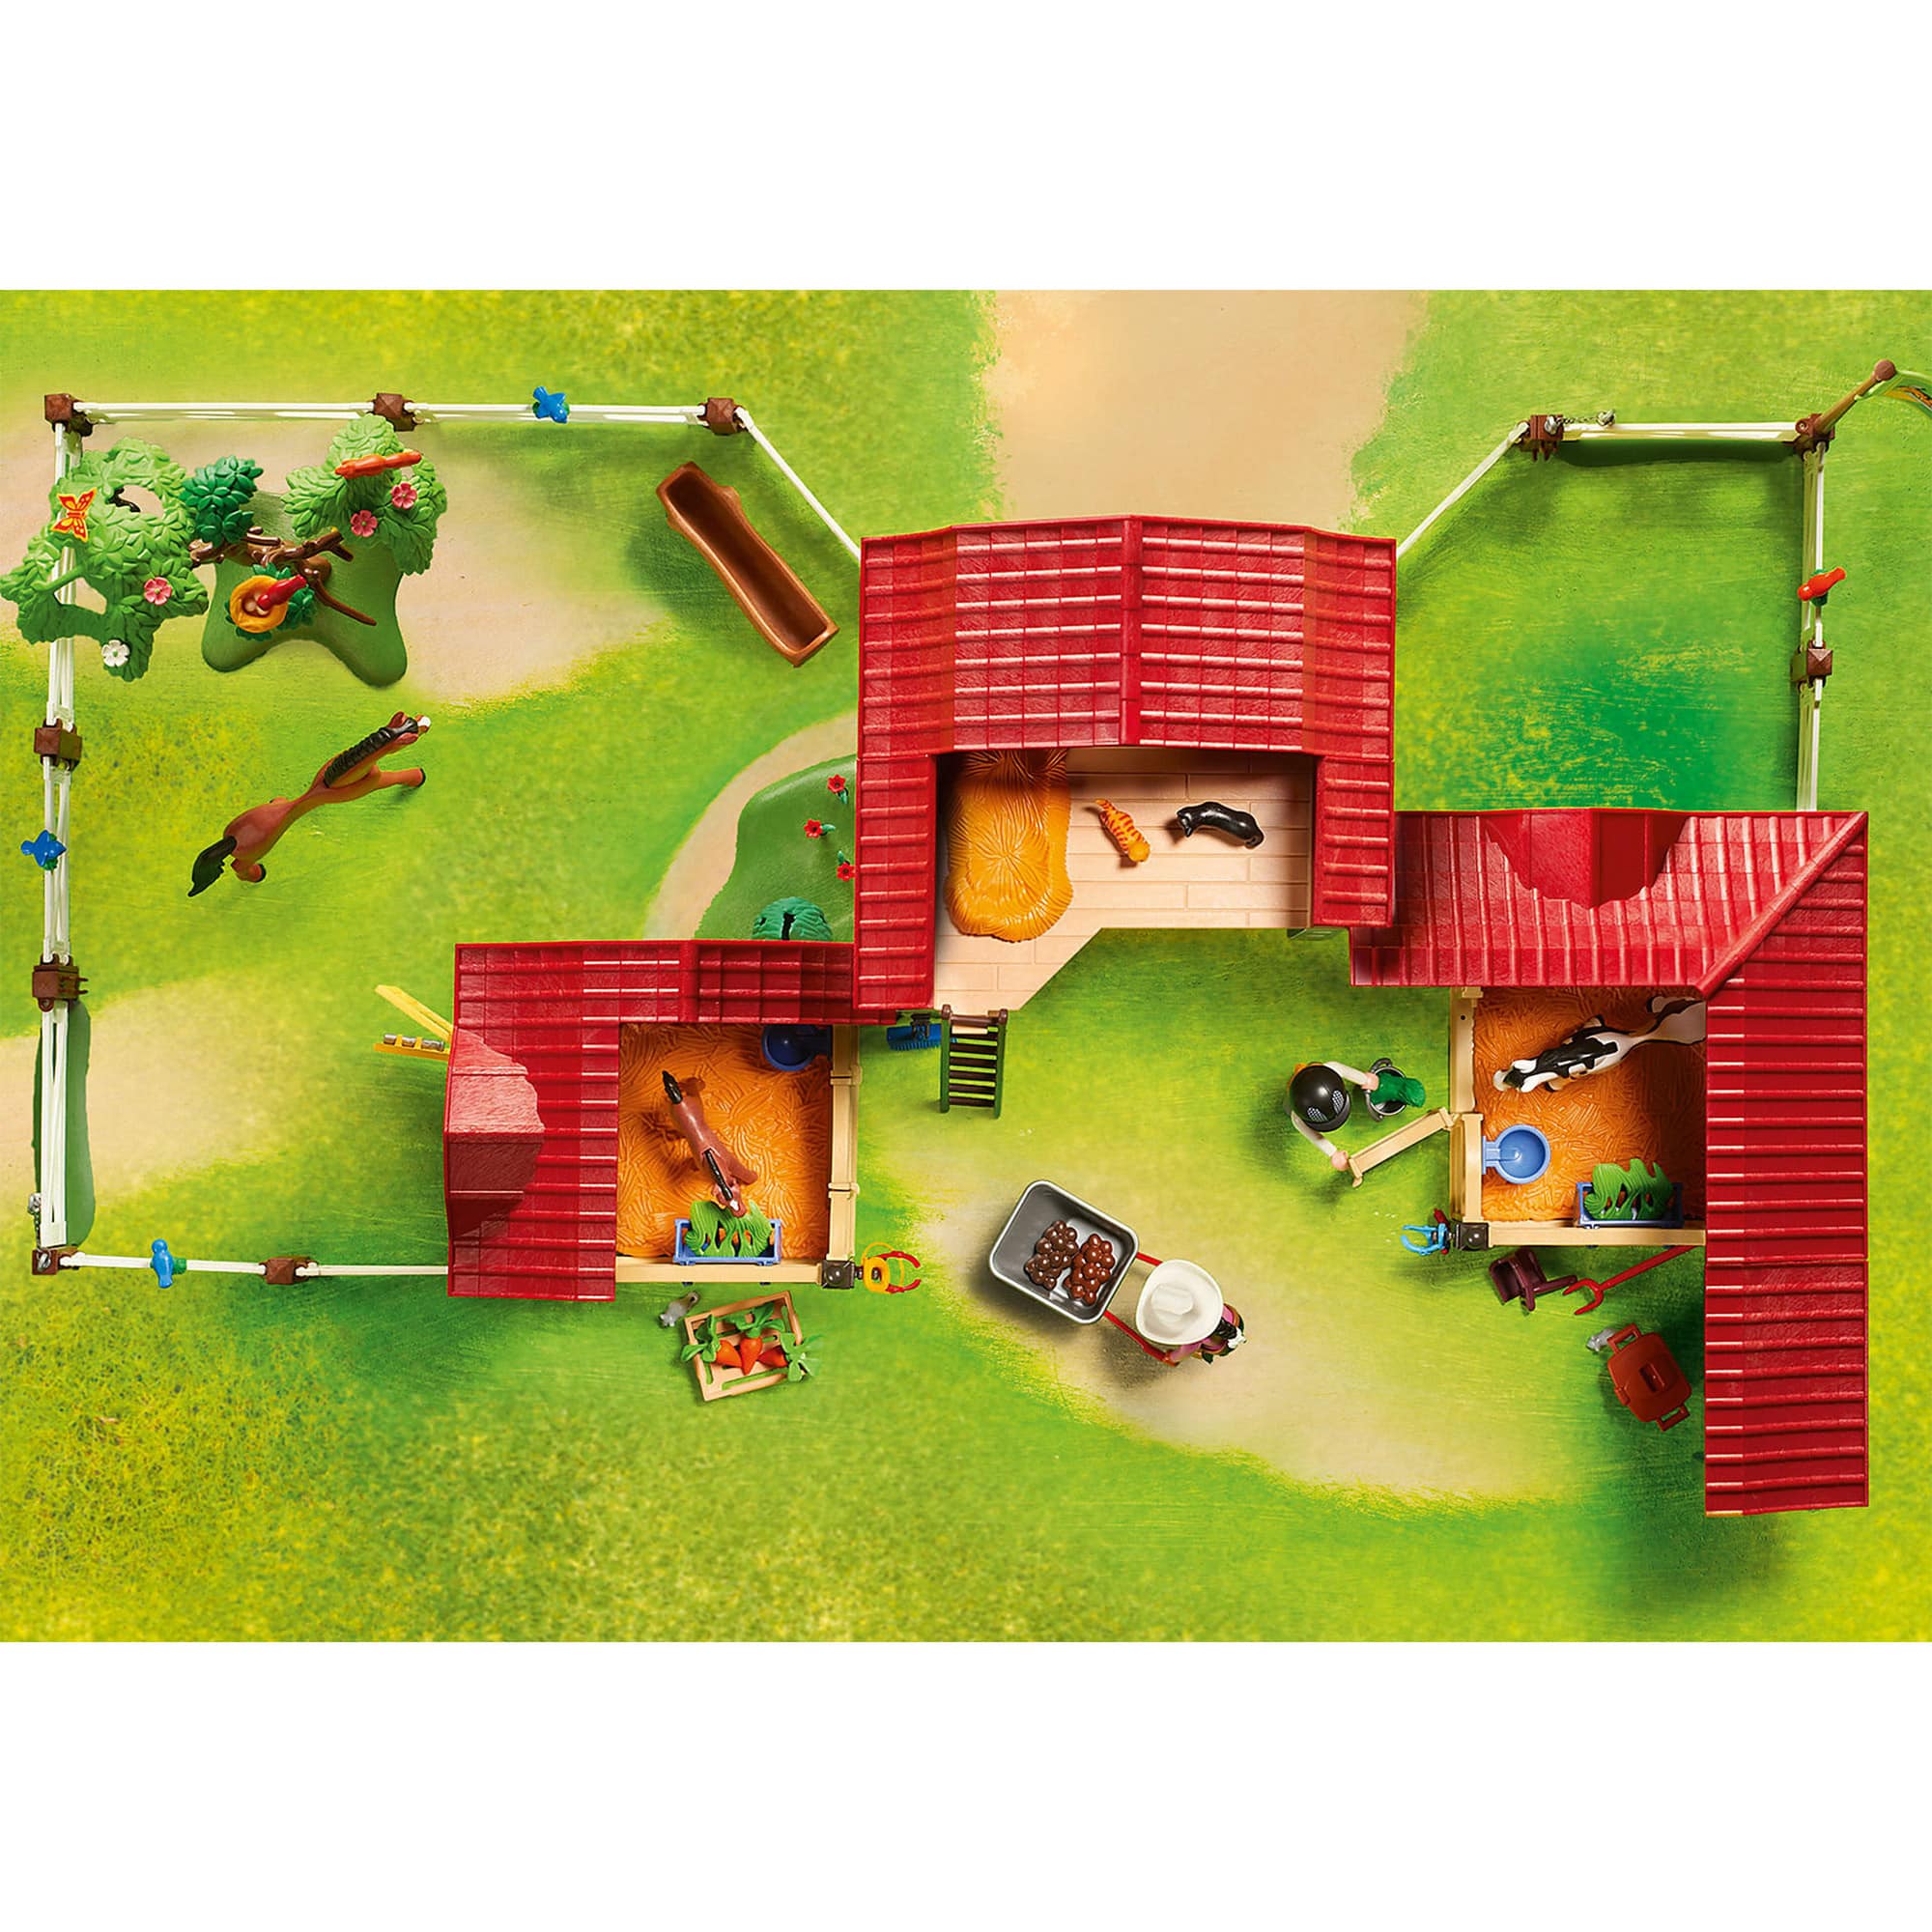 Playmobil - Country - Horse Farm 6926